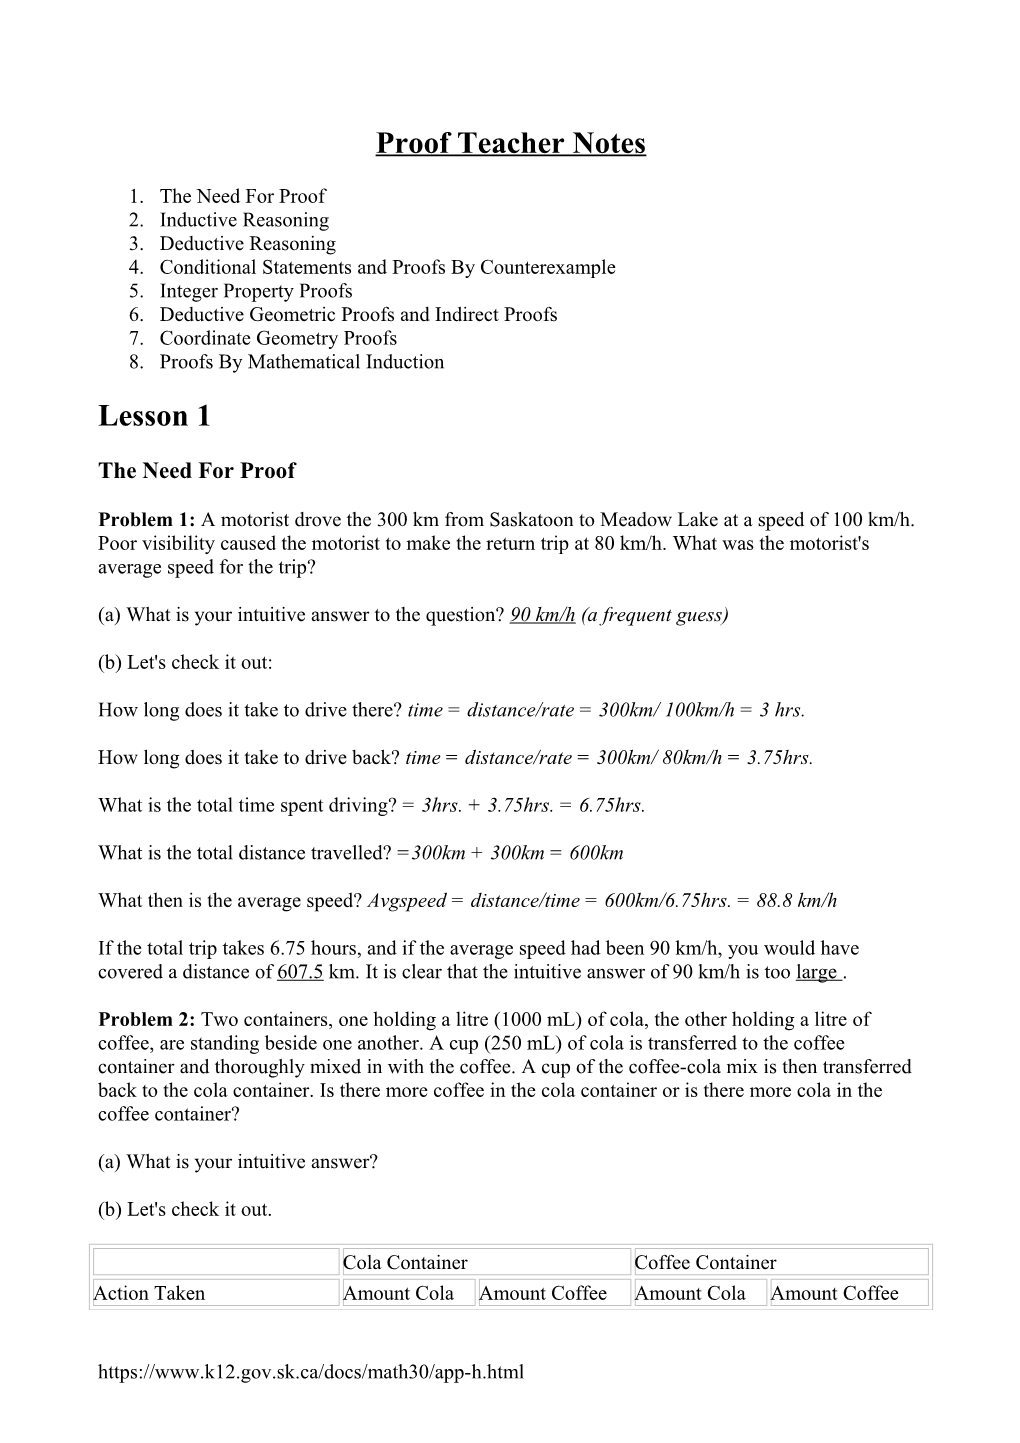 Mathematics 30 - Appendix H: Lesson 1